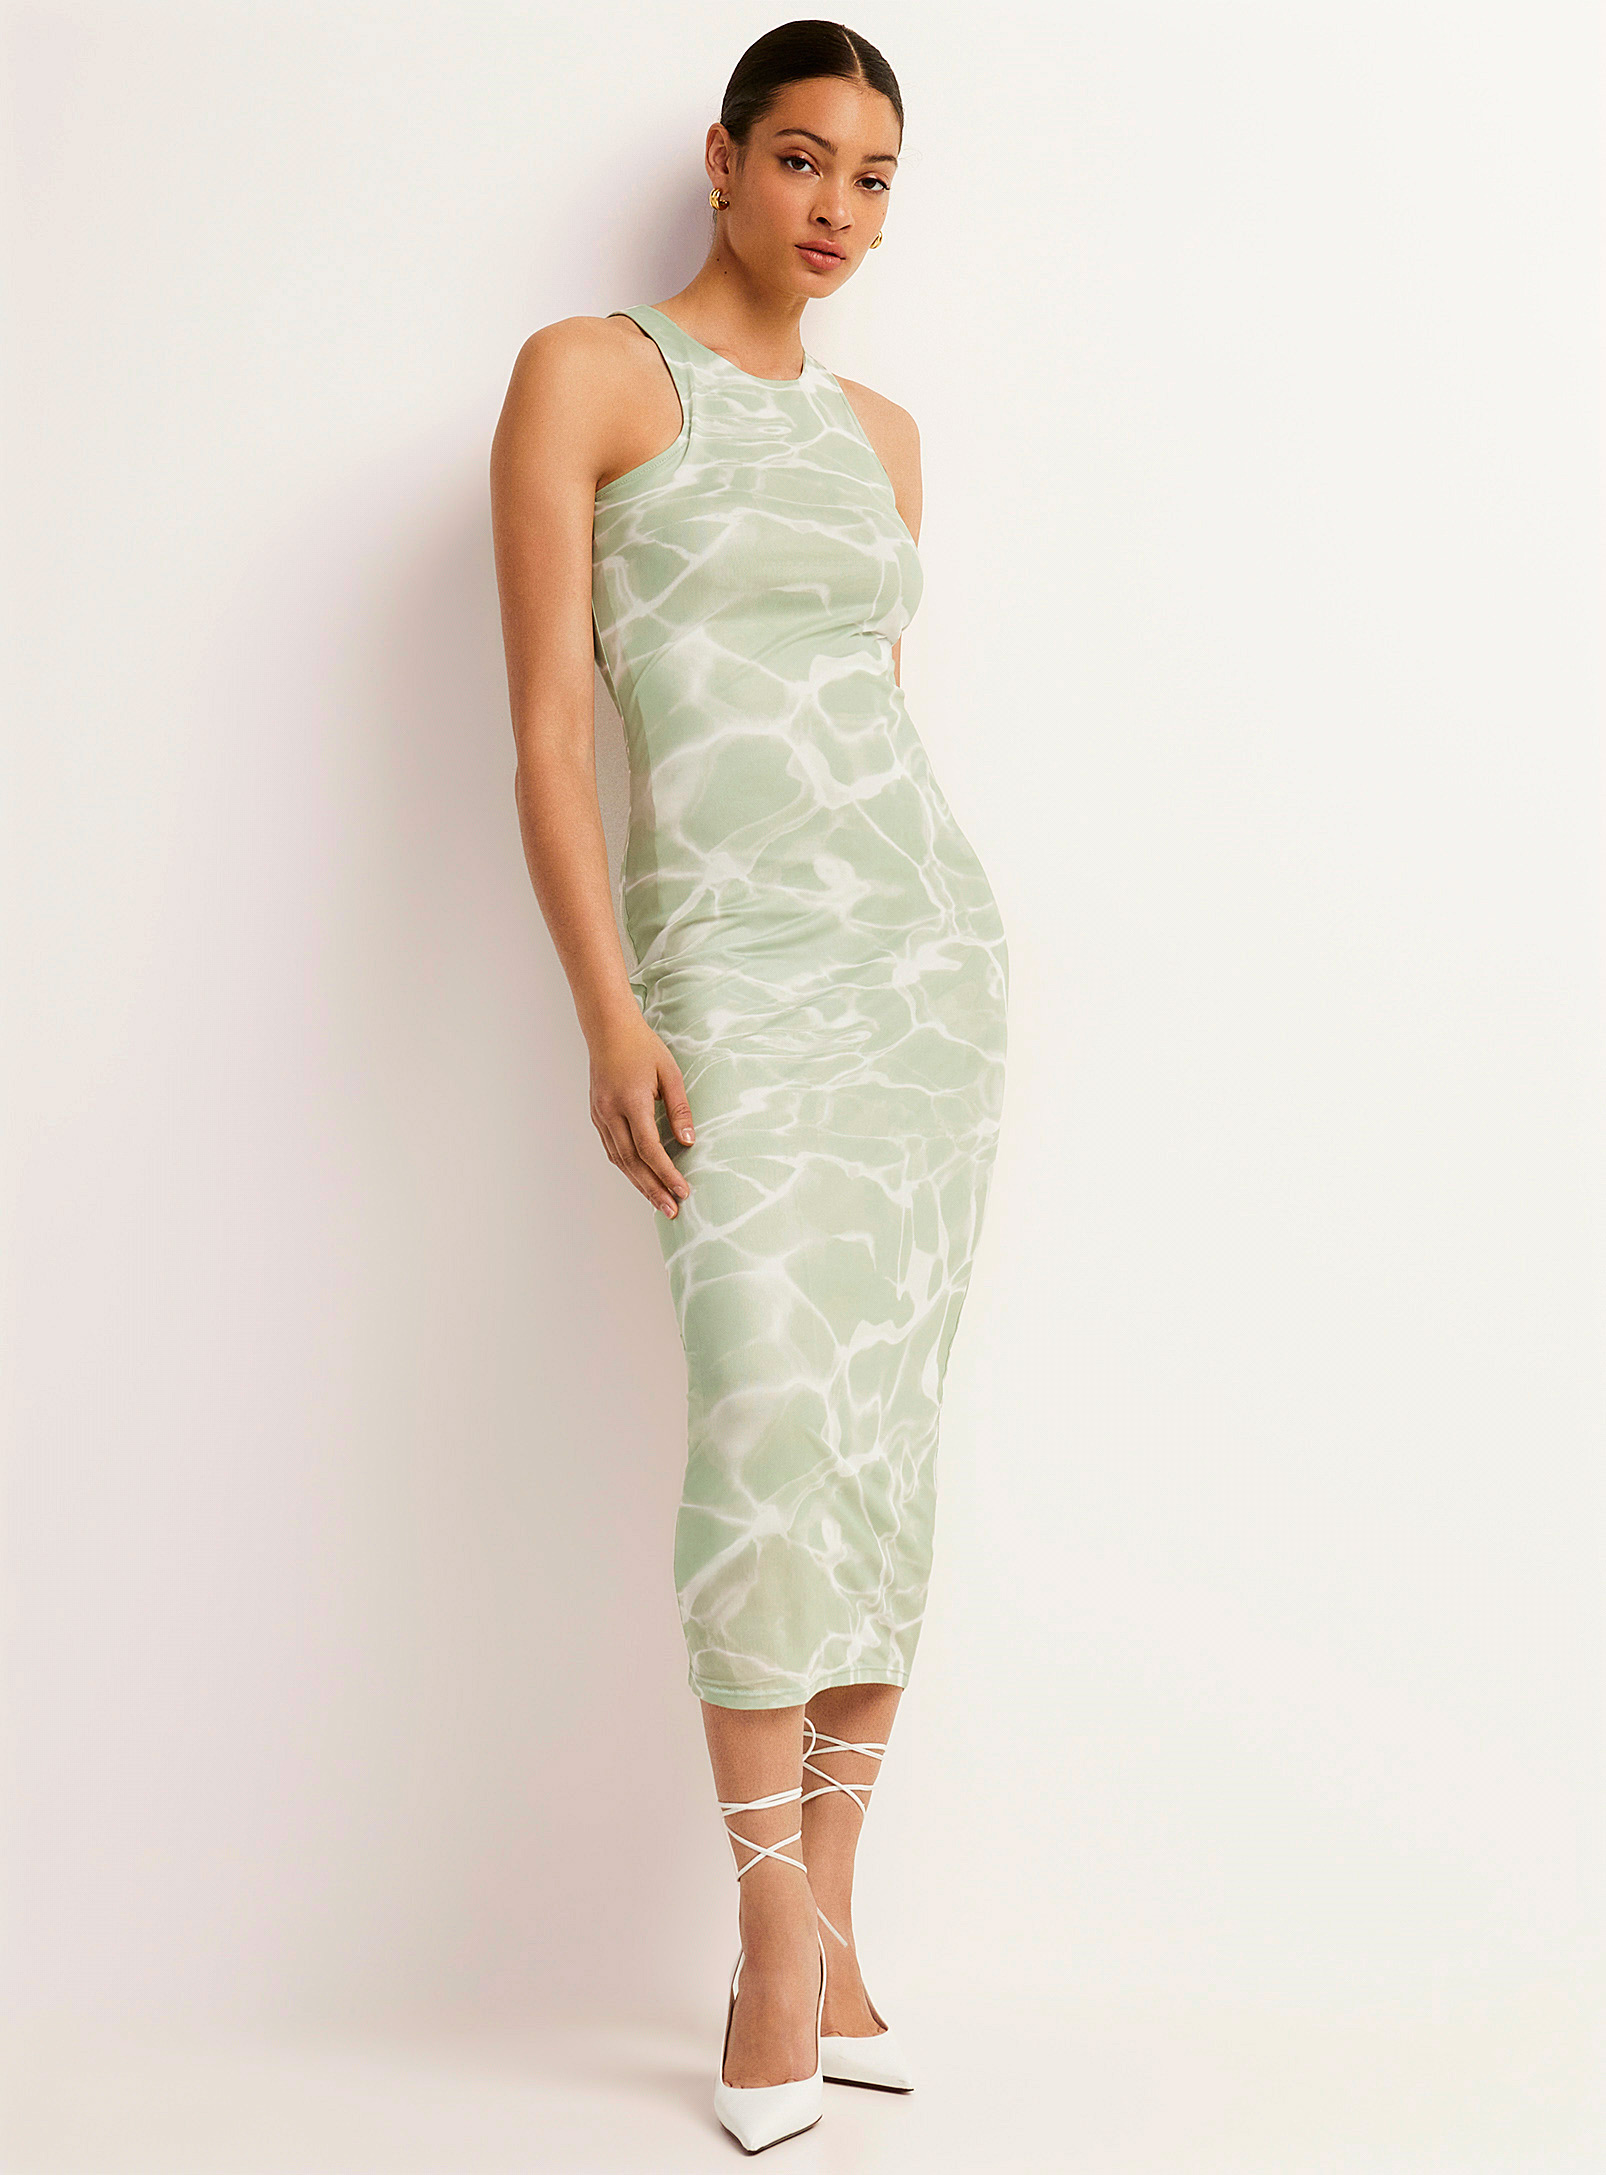 JJXX - La longue robe microfilet vert d'eau